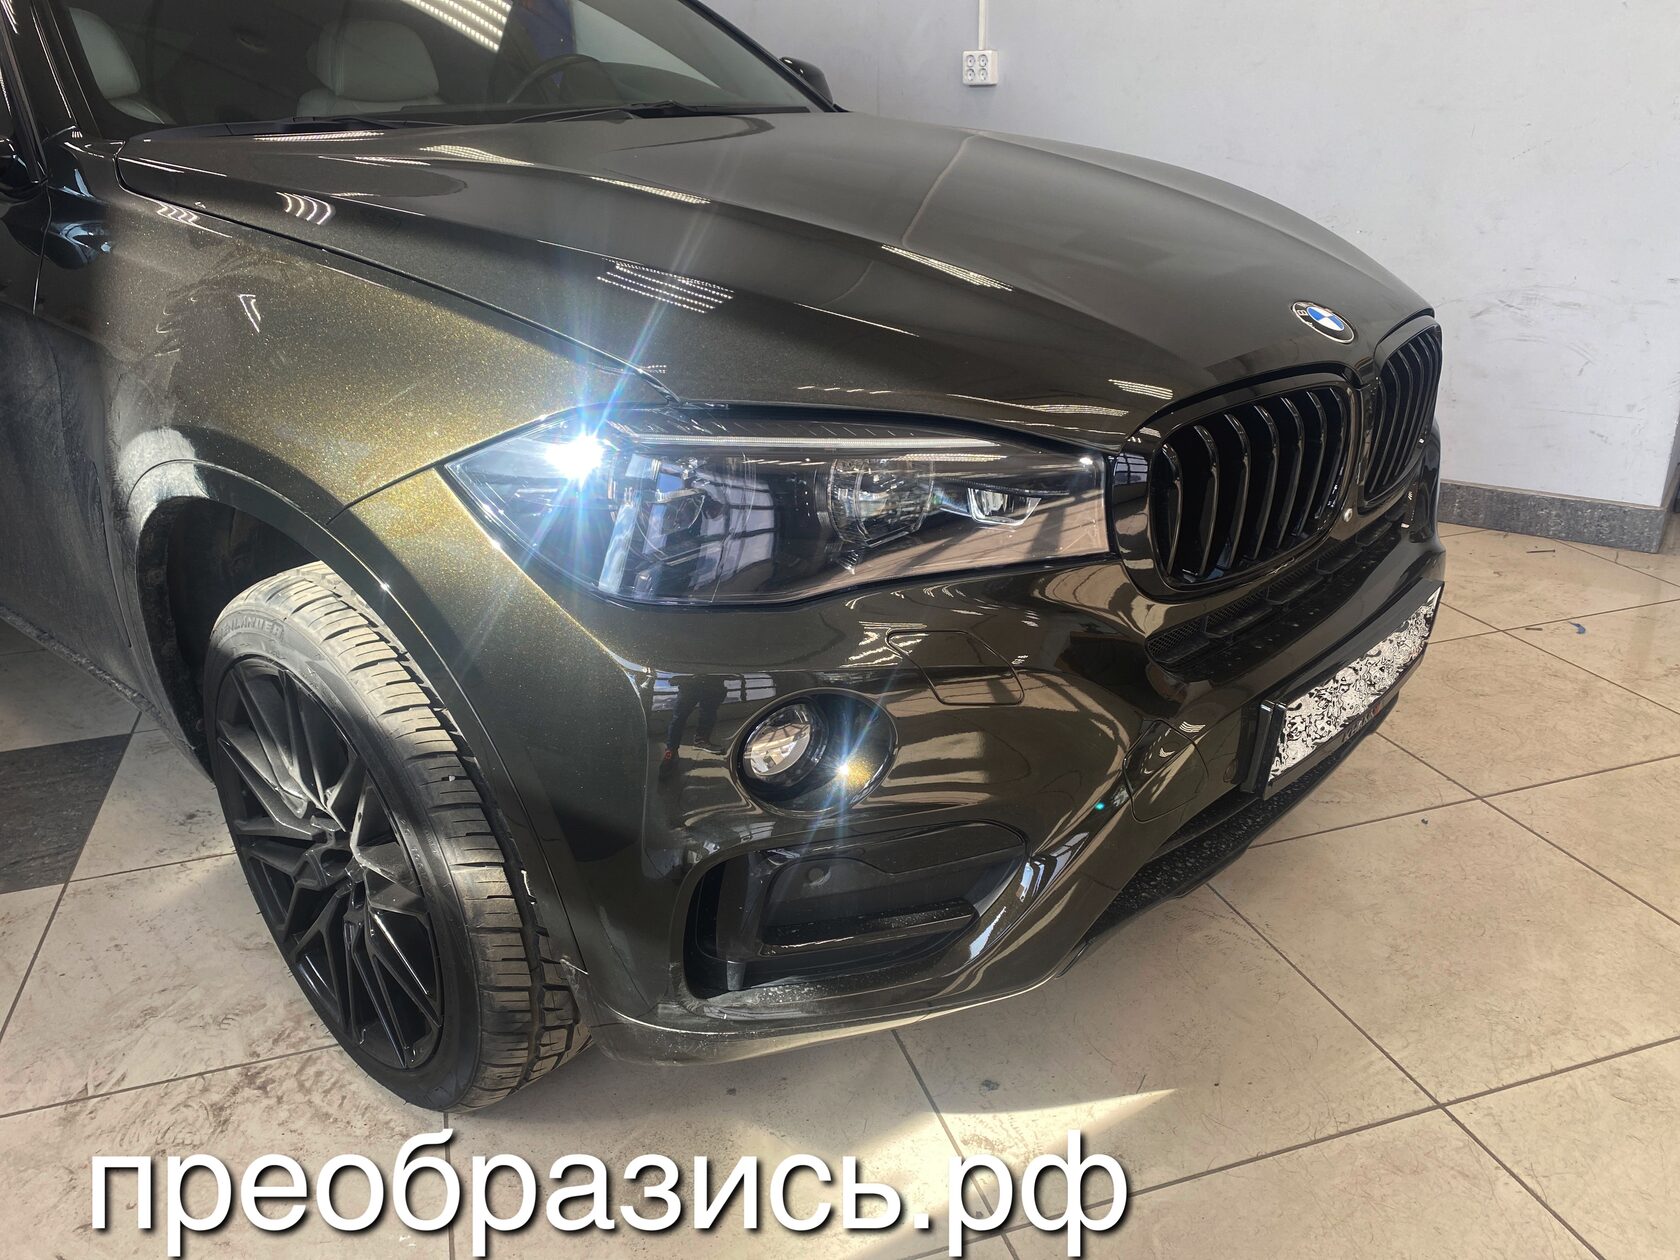 BMW X6 E72 фара , после окраски в черный глянец, на автомобиле